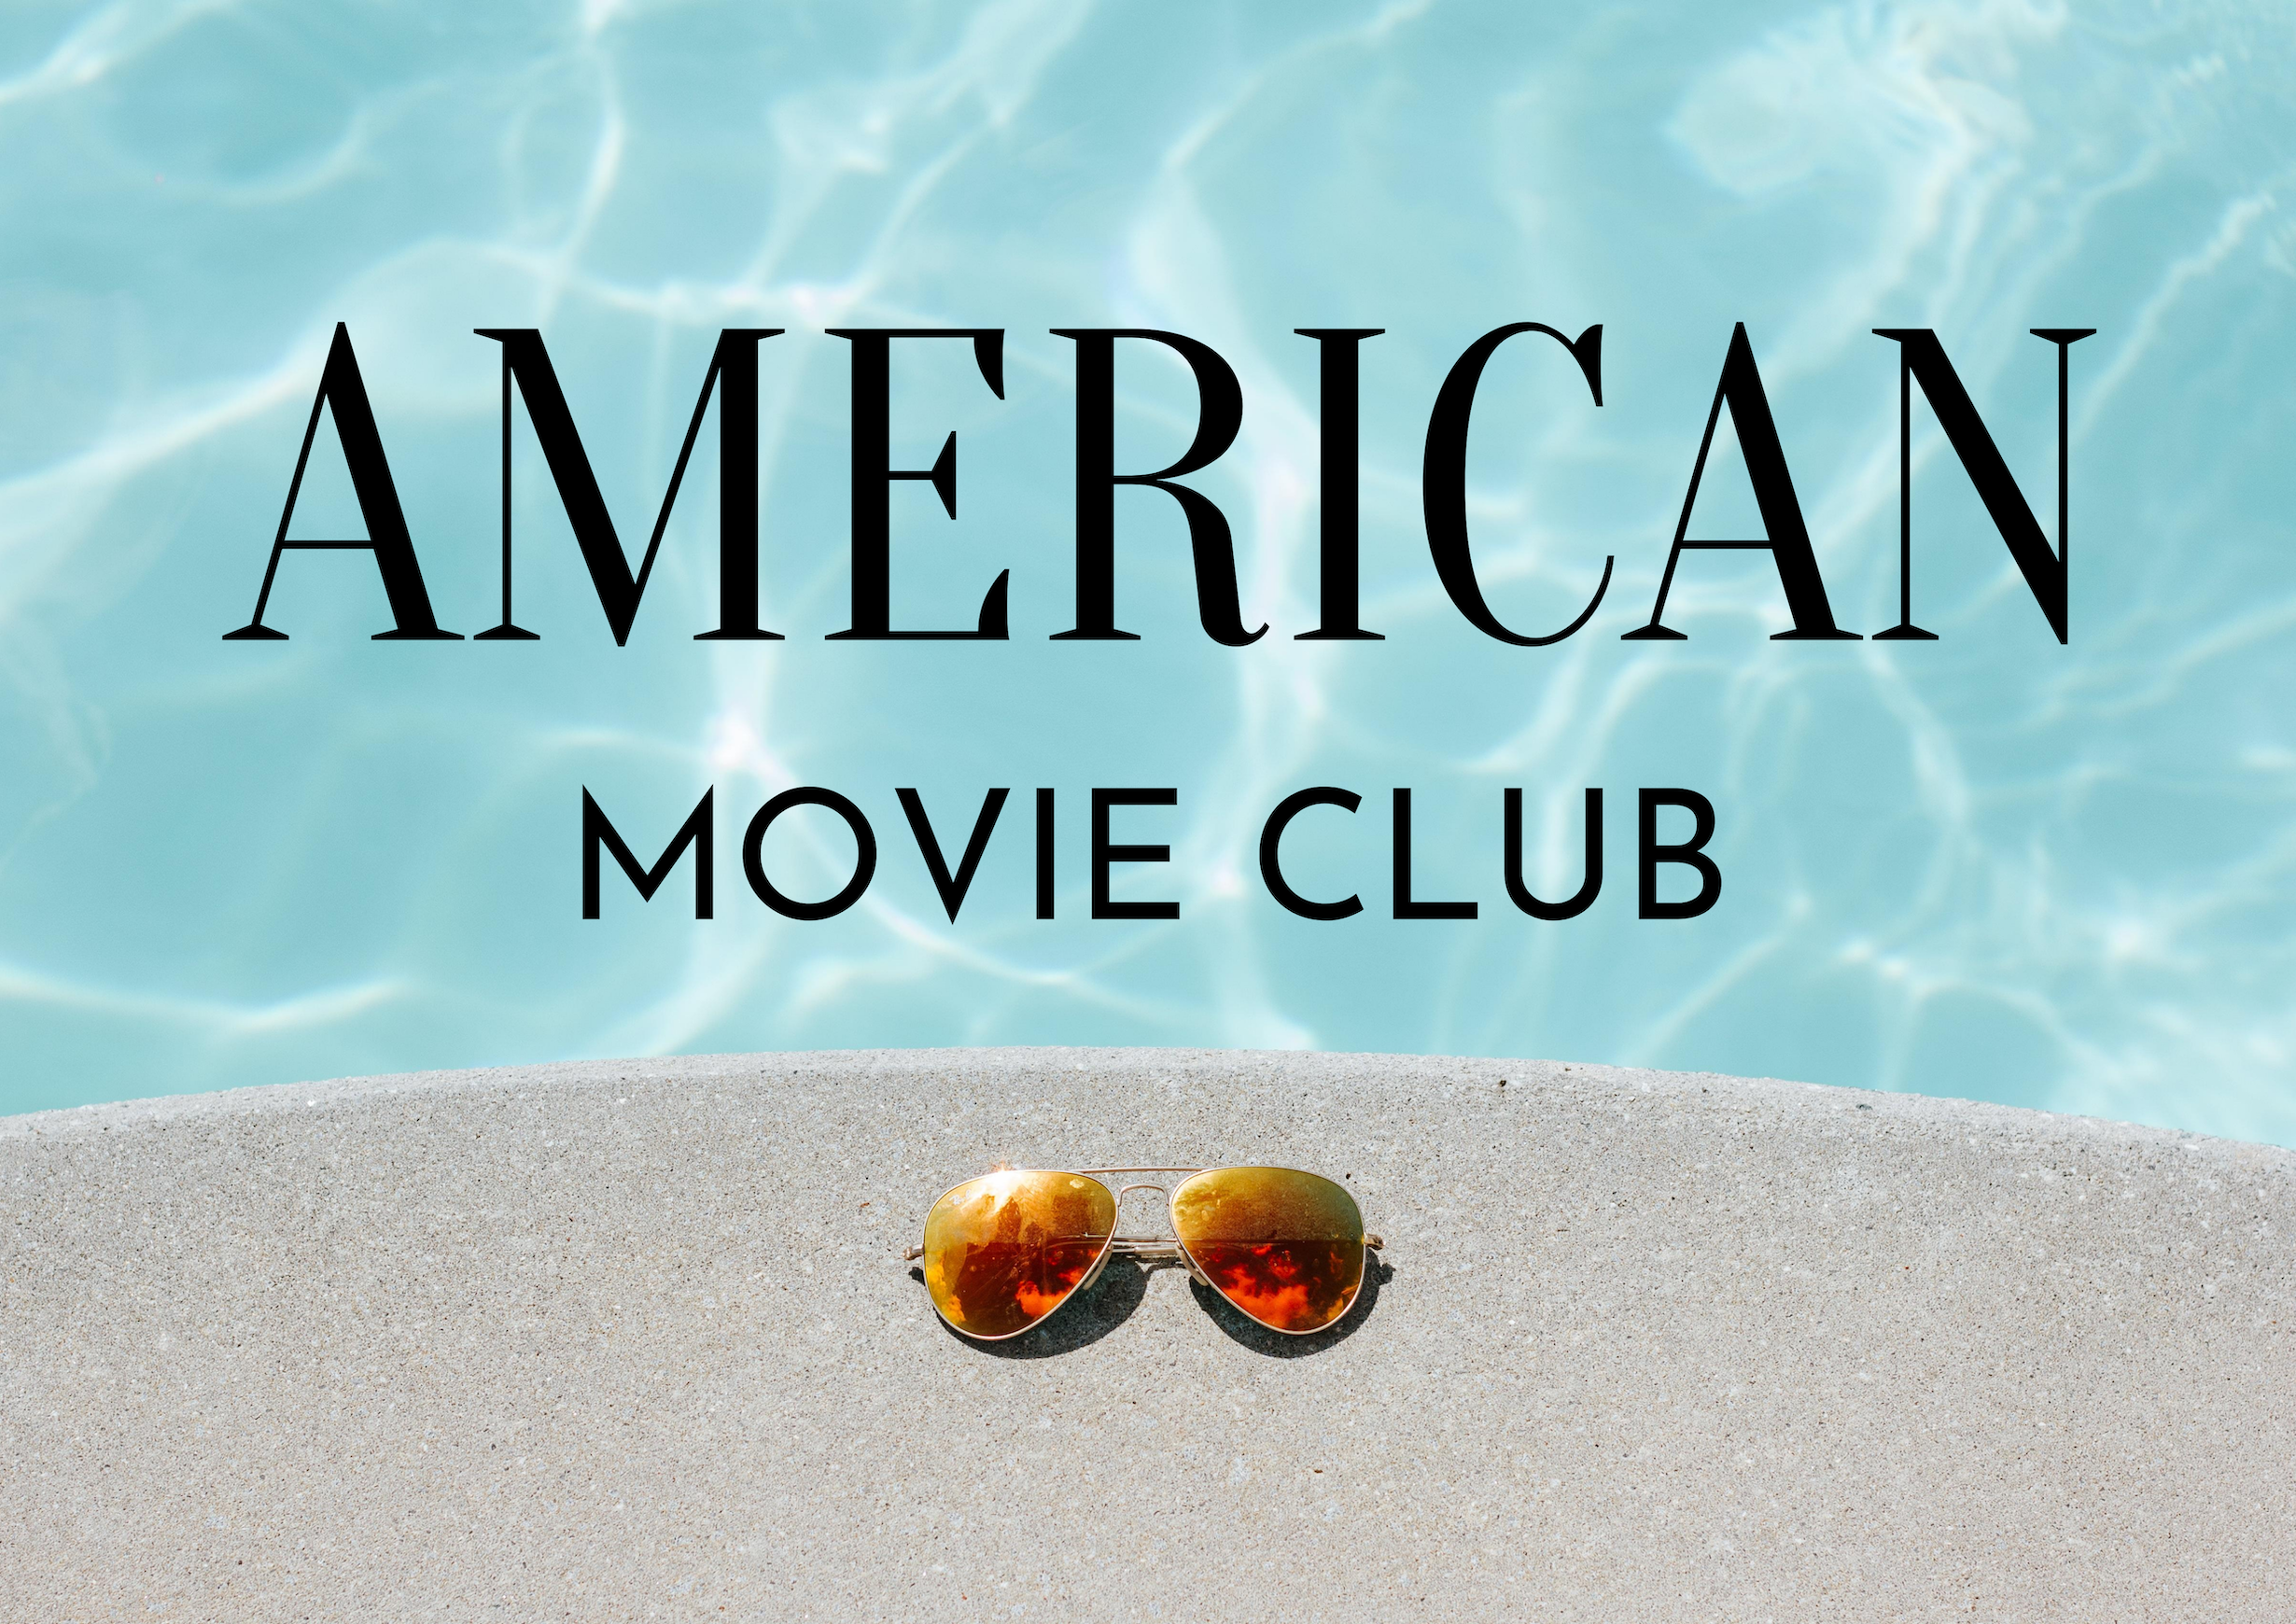 Ameican Movie Club